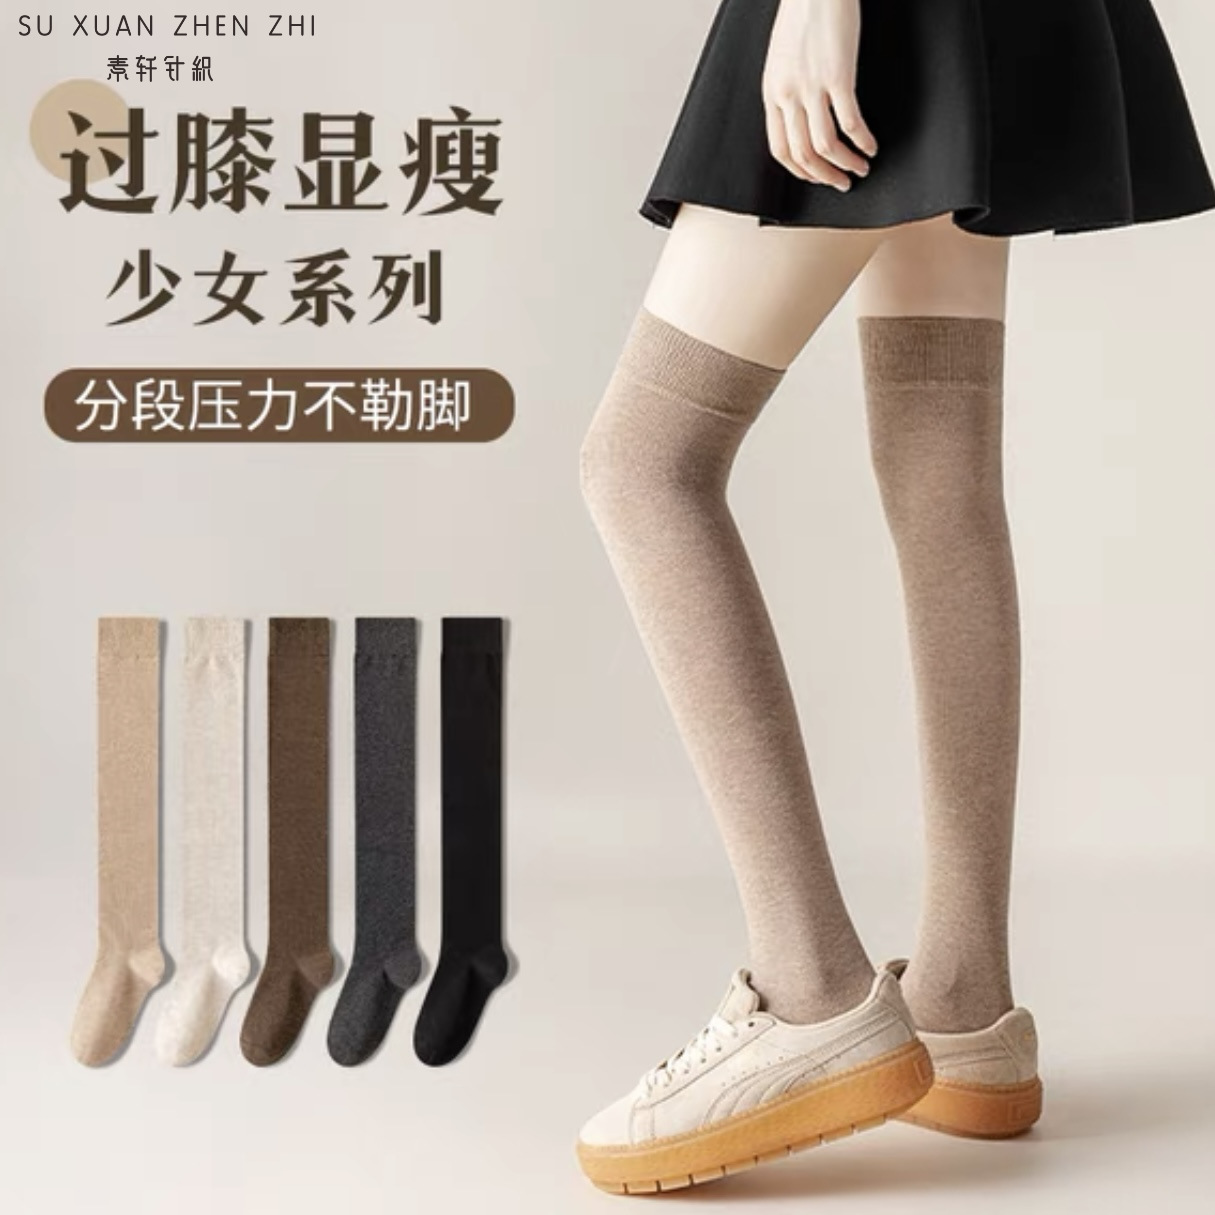 knee socks women‘s cotton autumn and winter long leg pressure leg shaping stockings coffee color series high tube knee pad thigh long socks